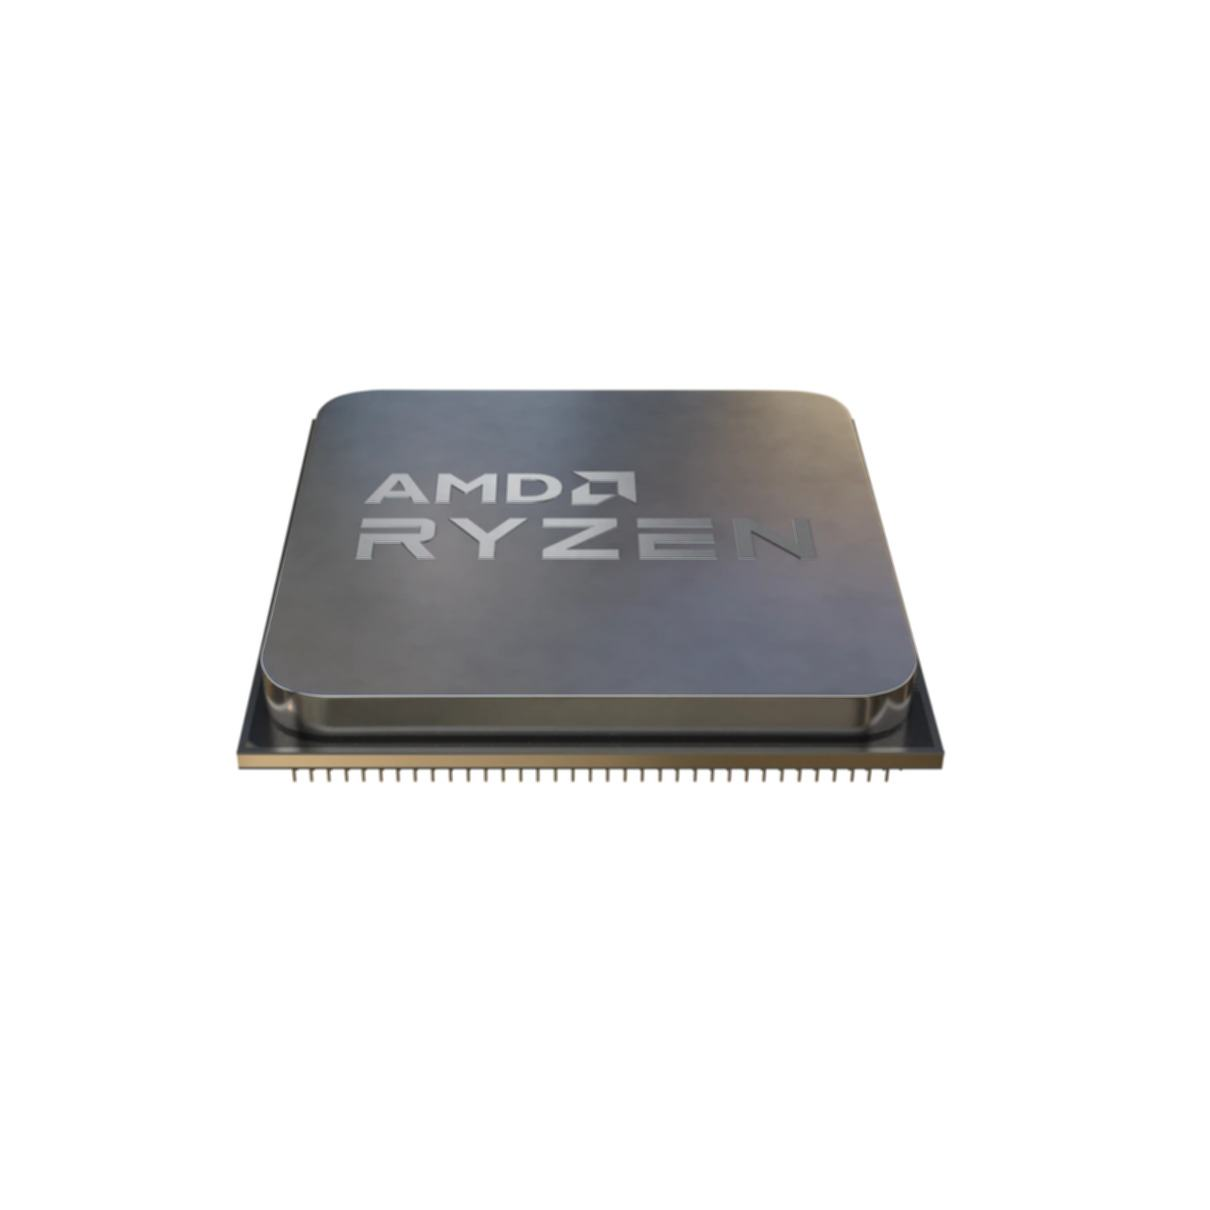 AMD Prozessor mit 5600 Boxed-Kühler, Mehrfarbig